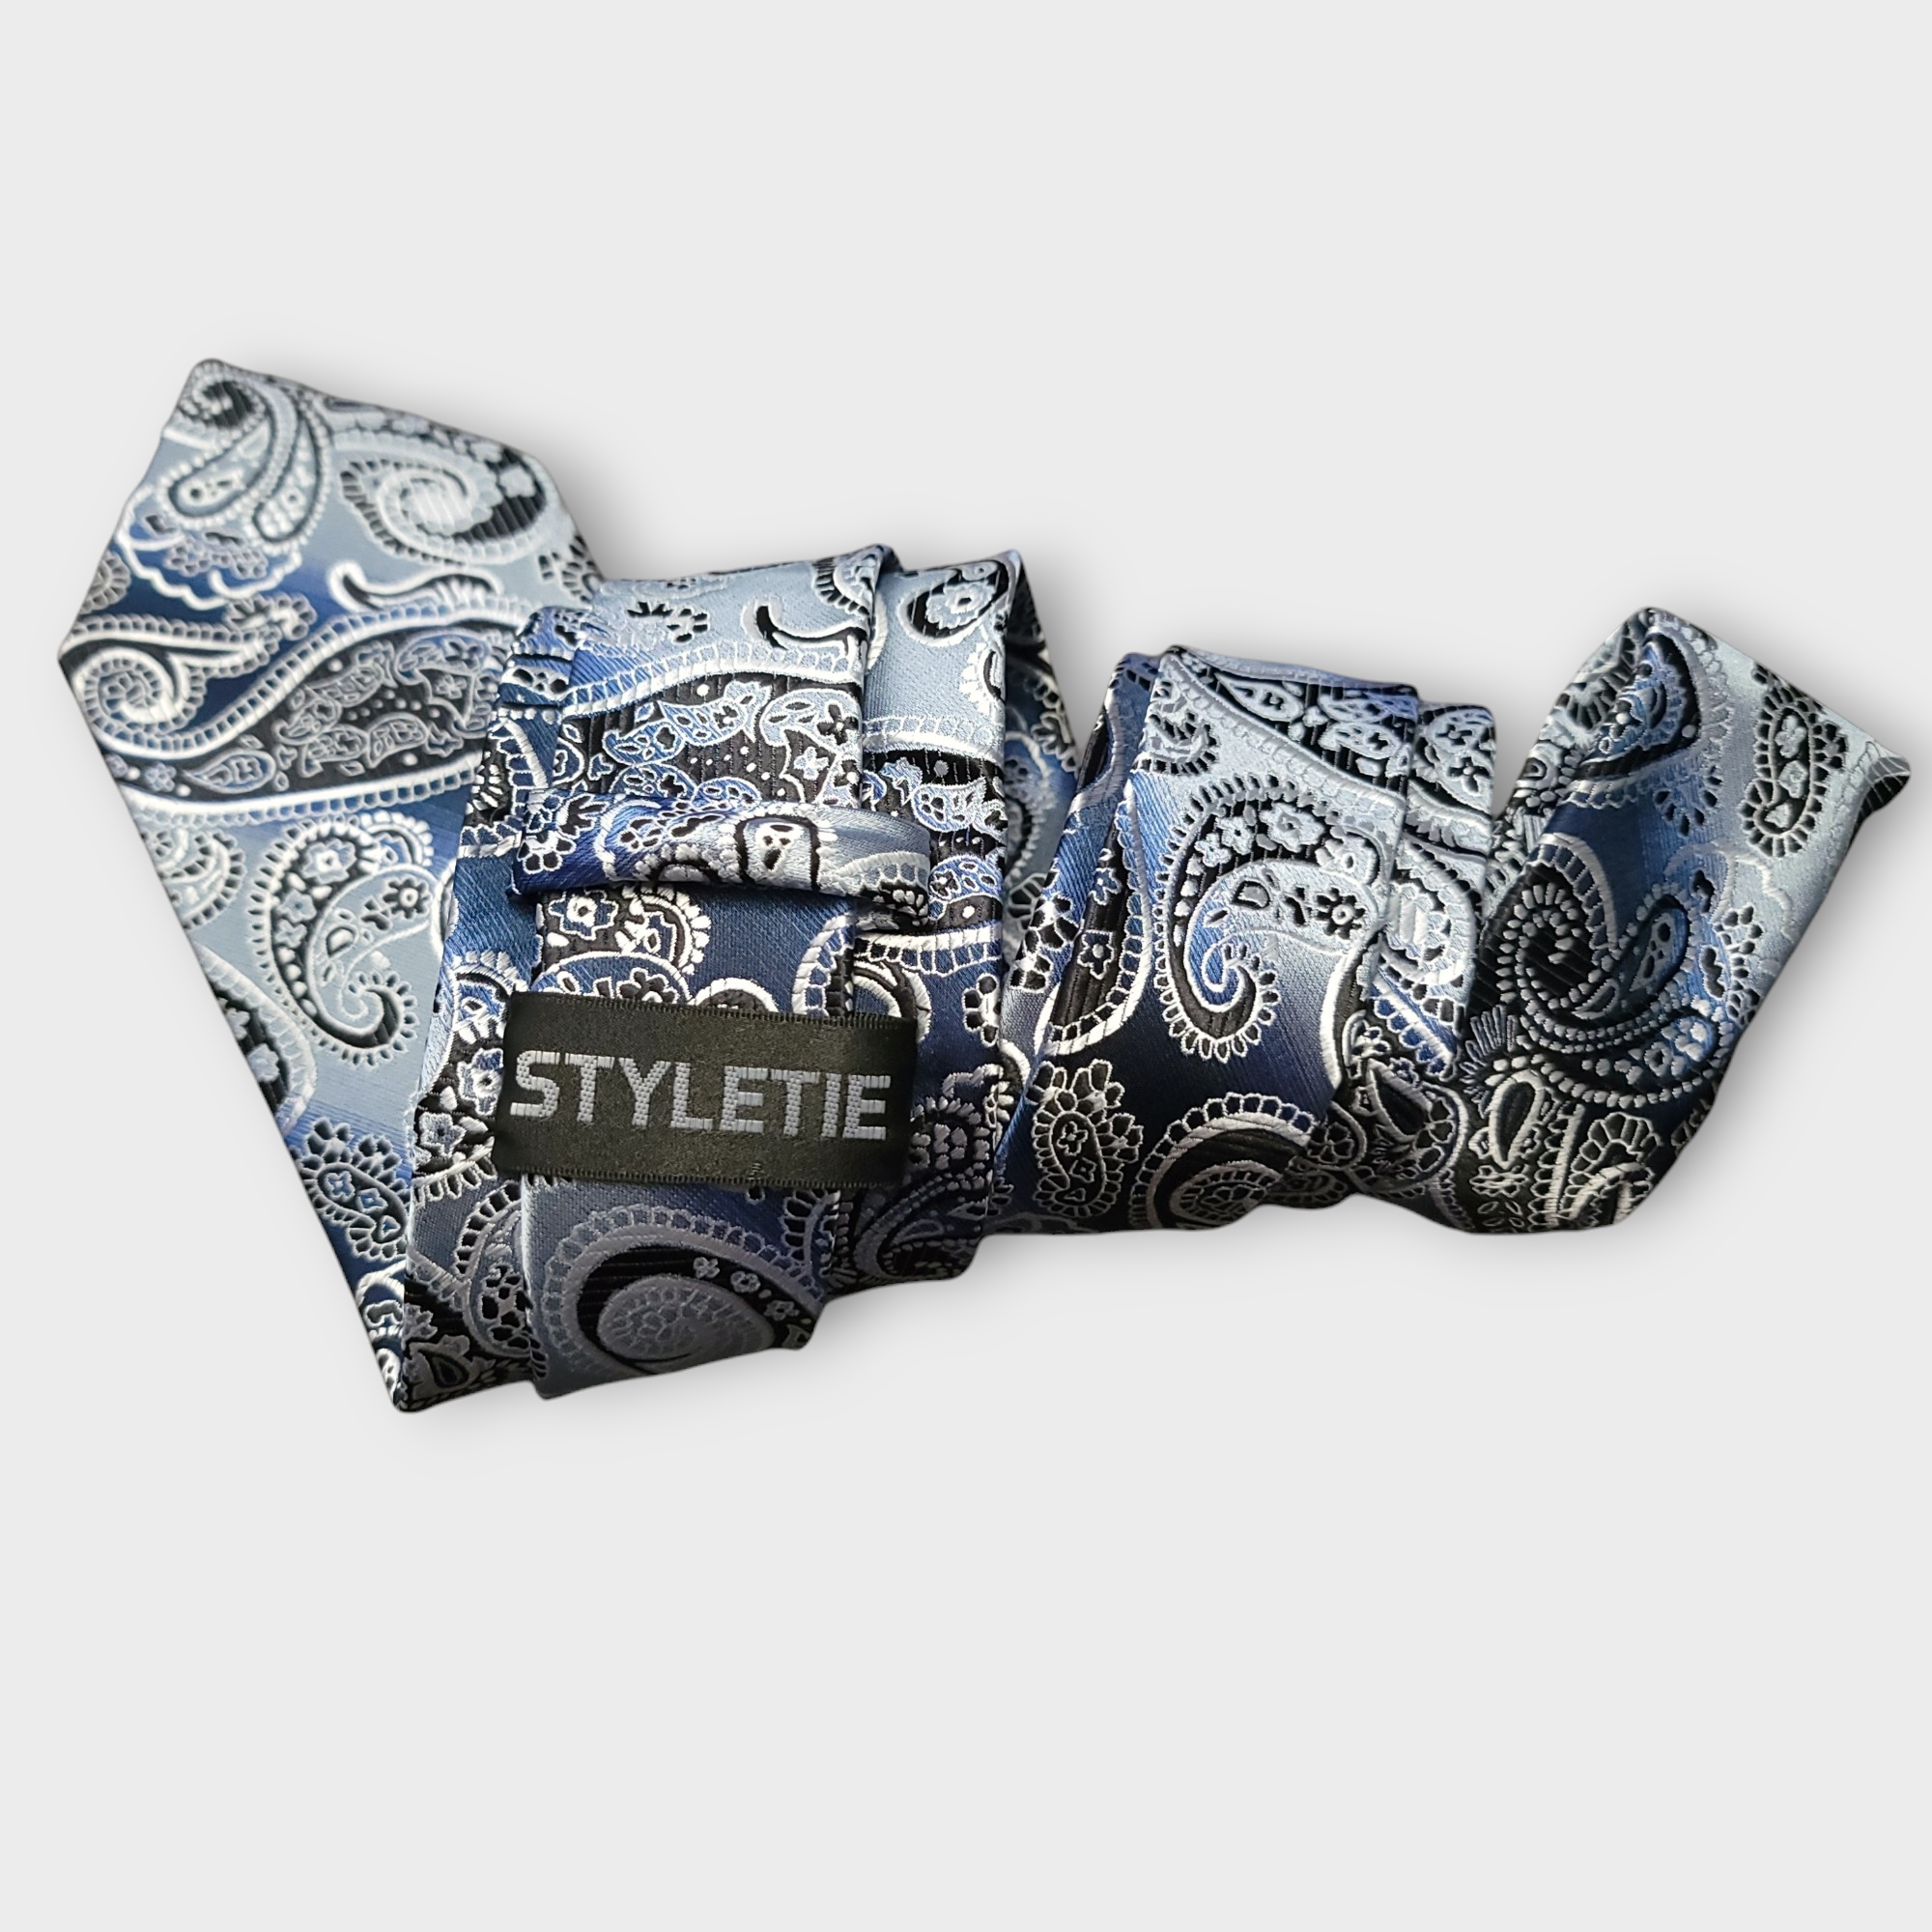 Blue Paisley Silk Tie Pocket Square Cufflink Set